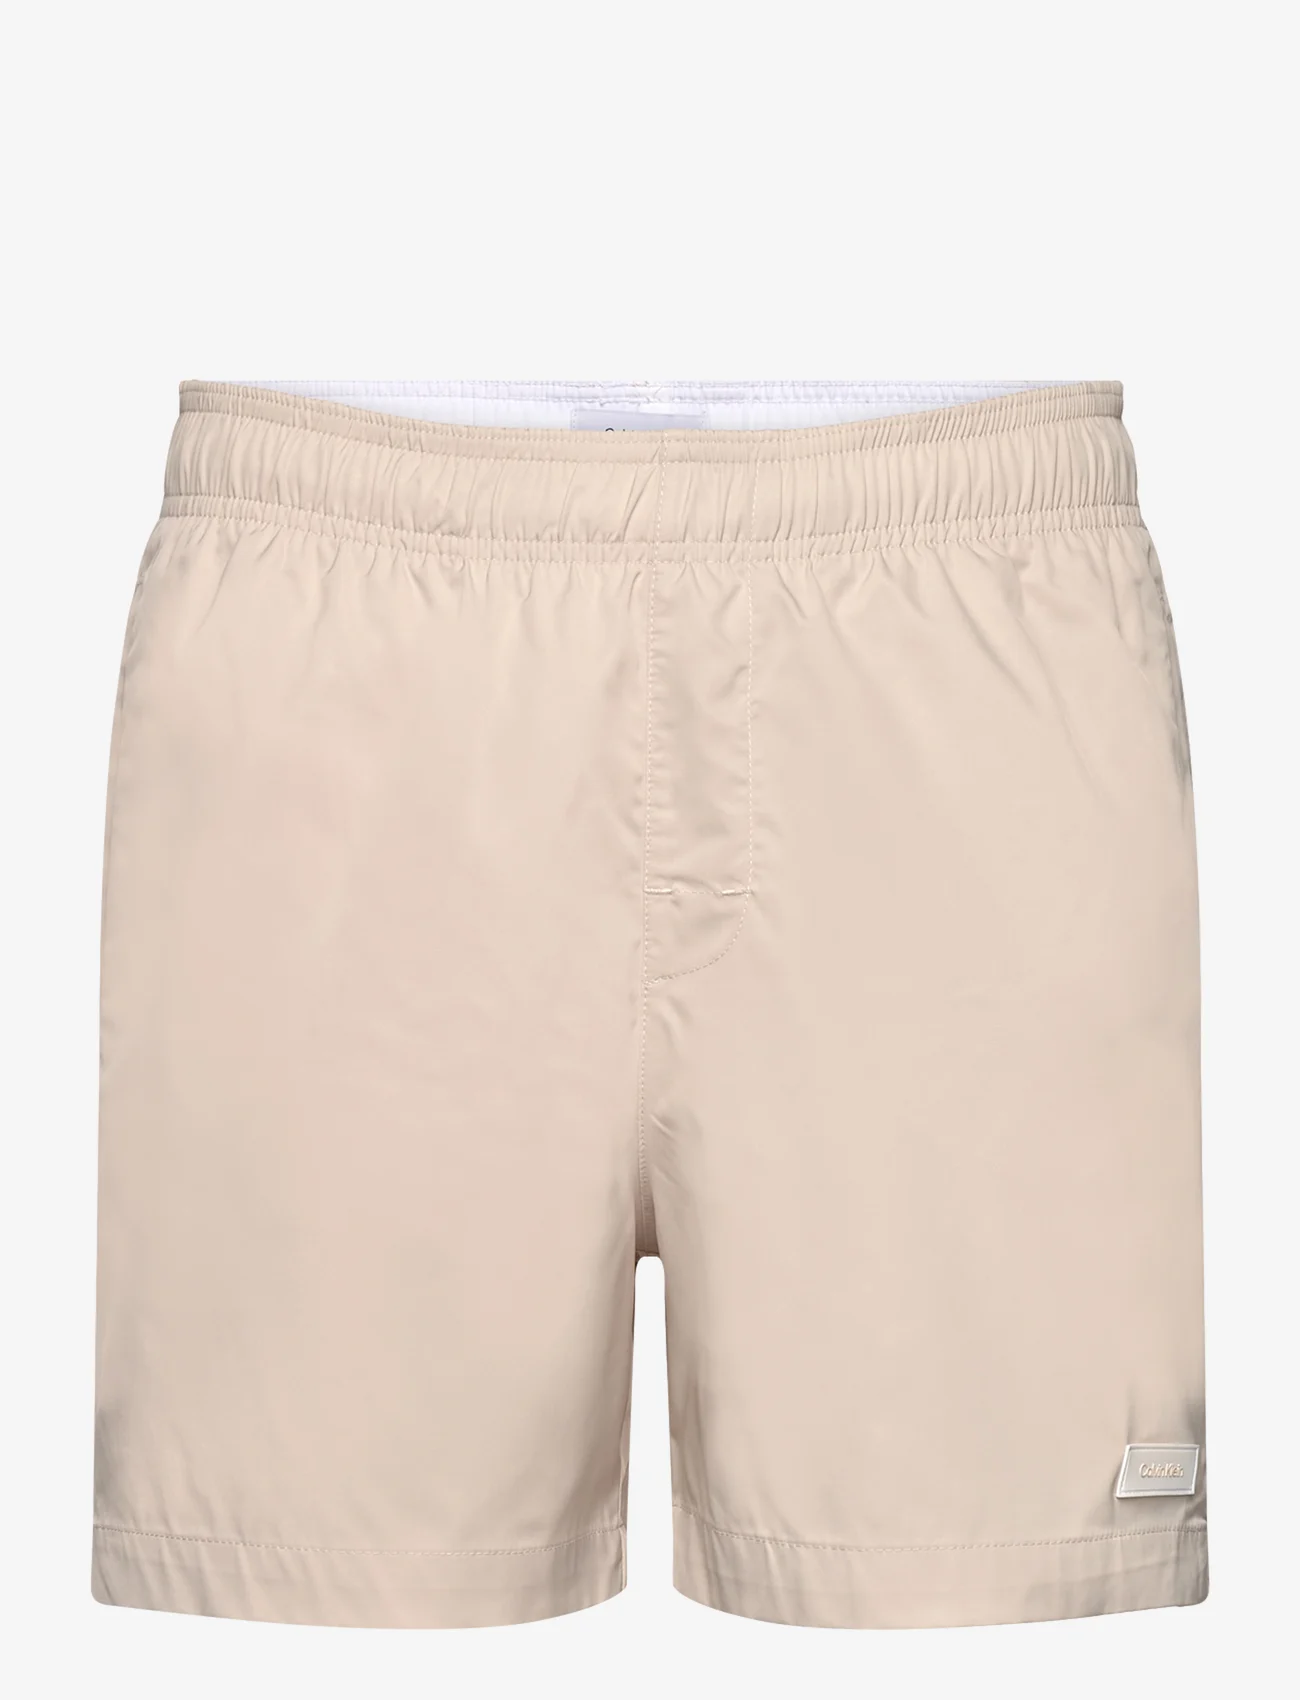 Calvin Klein - MEDIUM DRAWSTRING - swim shorts - stony beige - 0